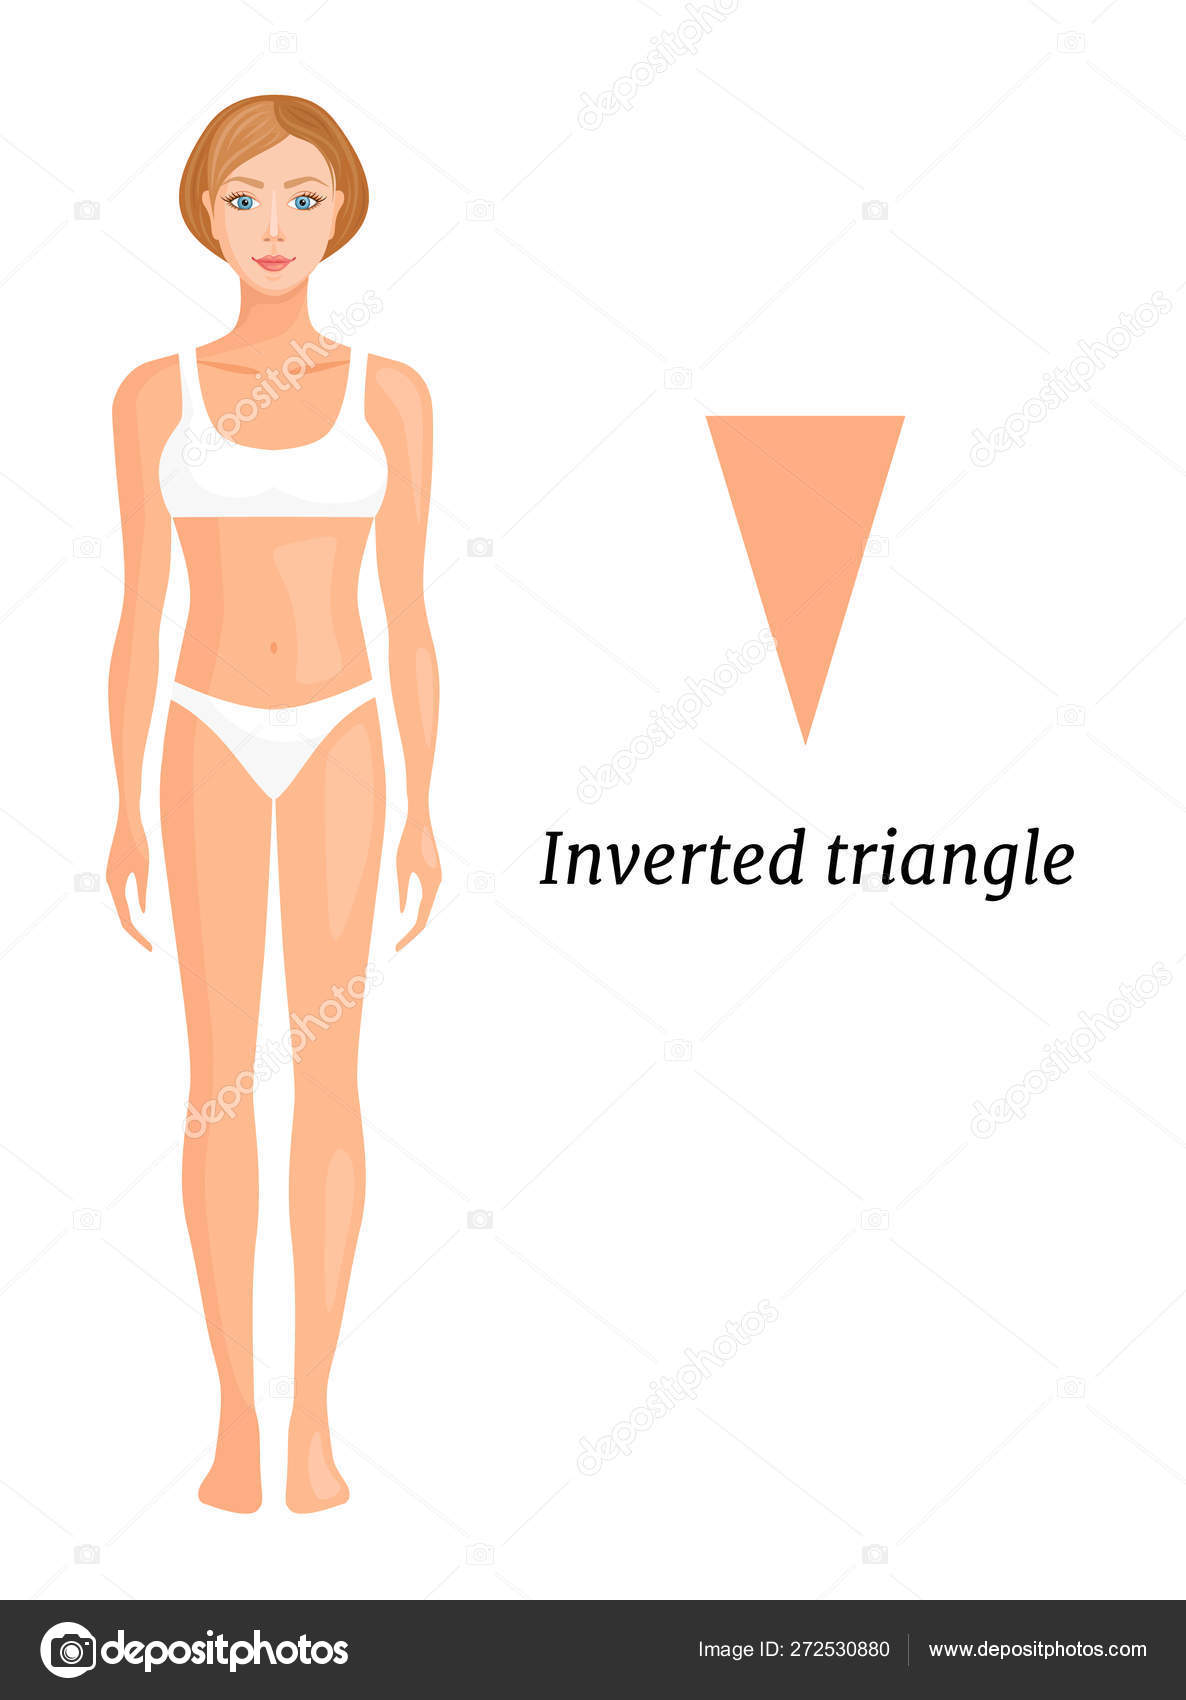 Figura de triângulo invertido. Formas corporais femininas